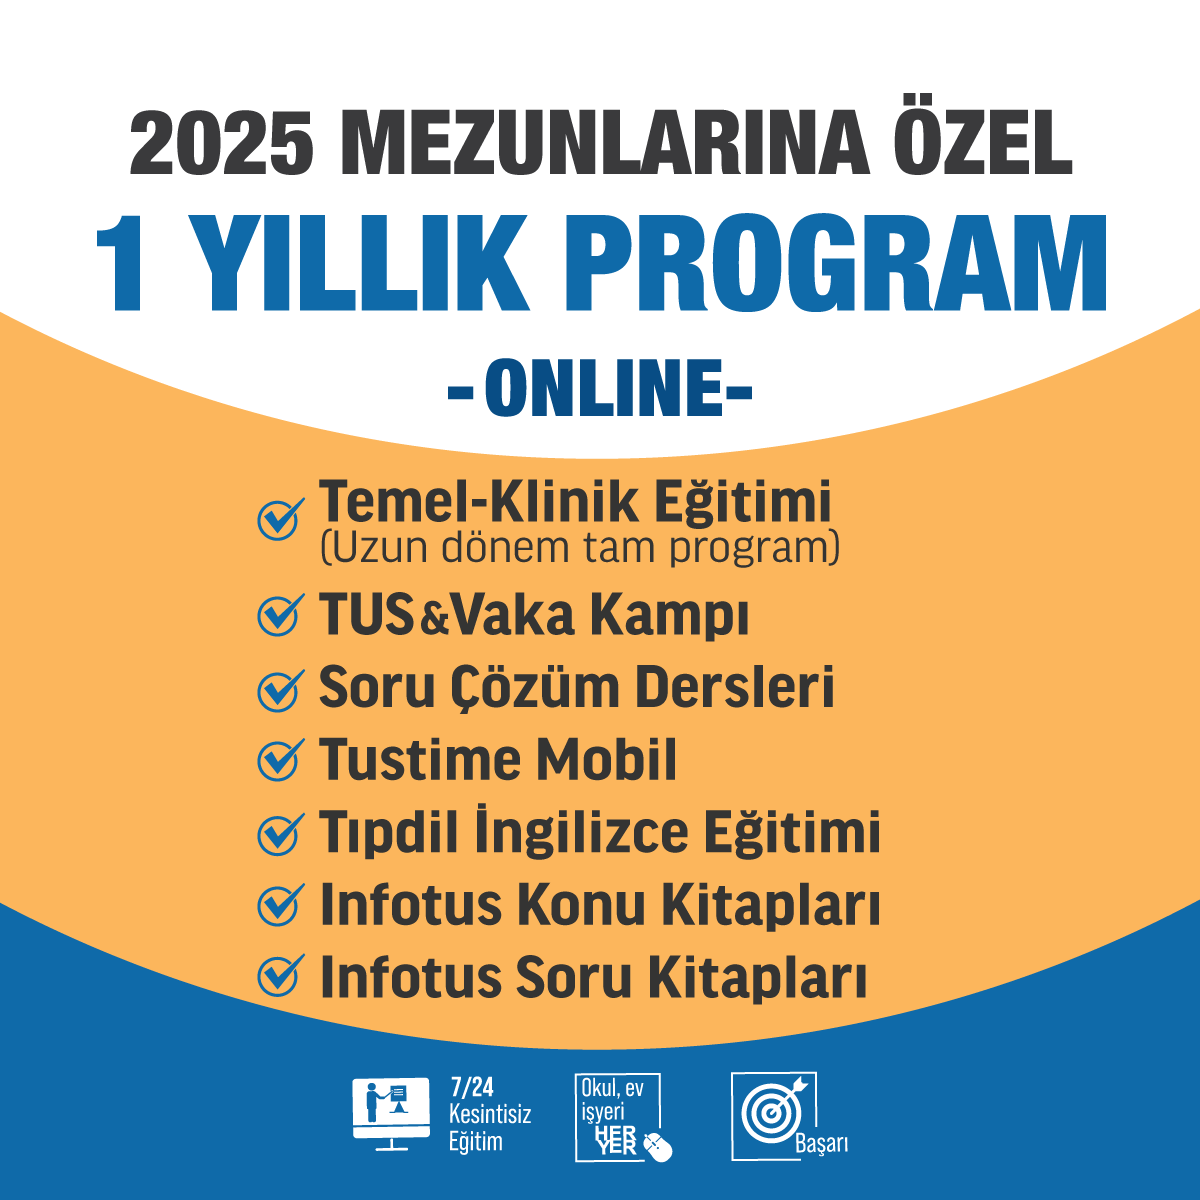 1-YILLIK-PROGRAM-ONLINE-2025